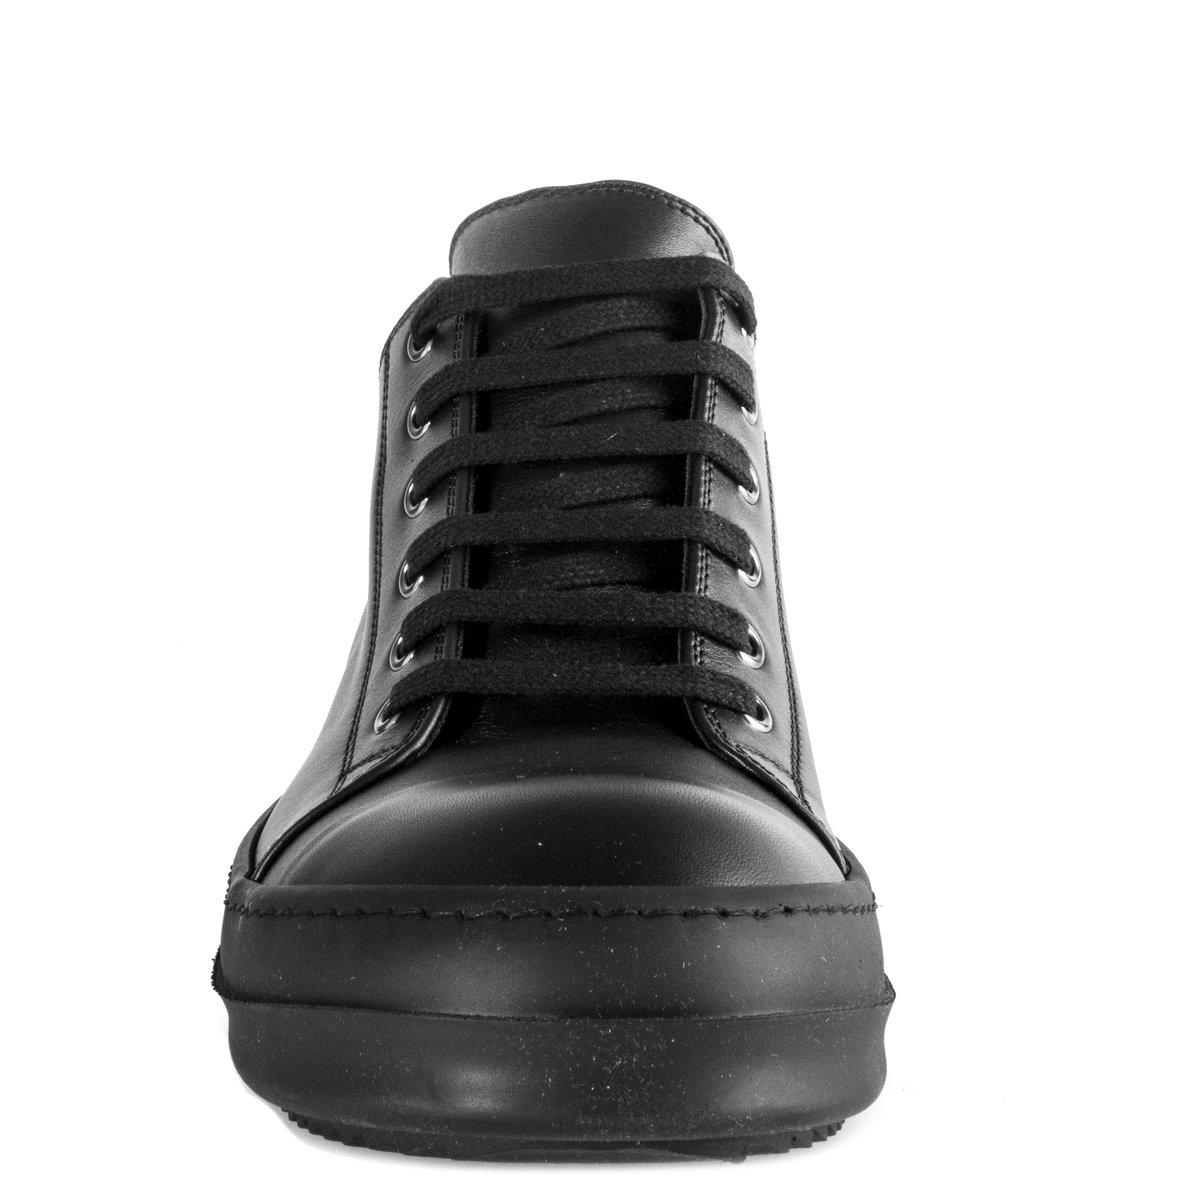 Rick Owens Low Top Leather Sneakers in Black/Black (Black) for Men - Lyst